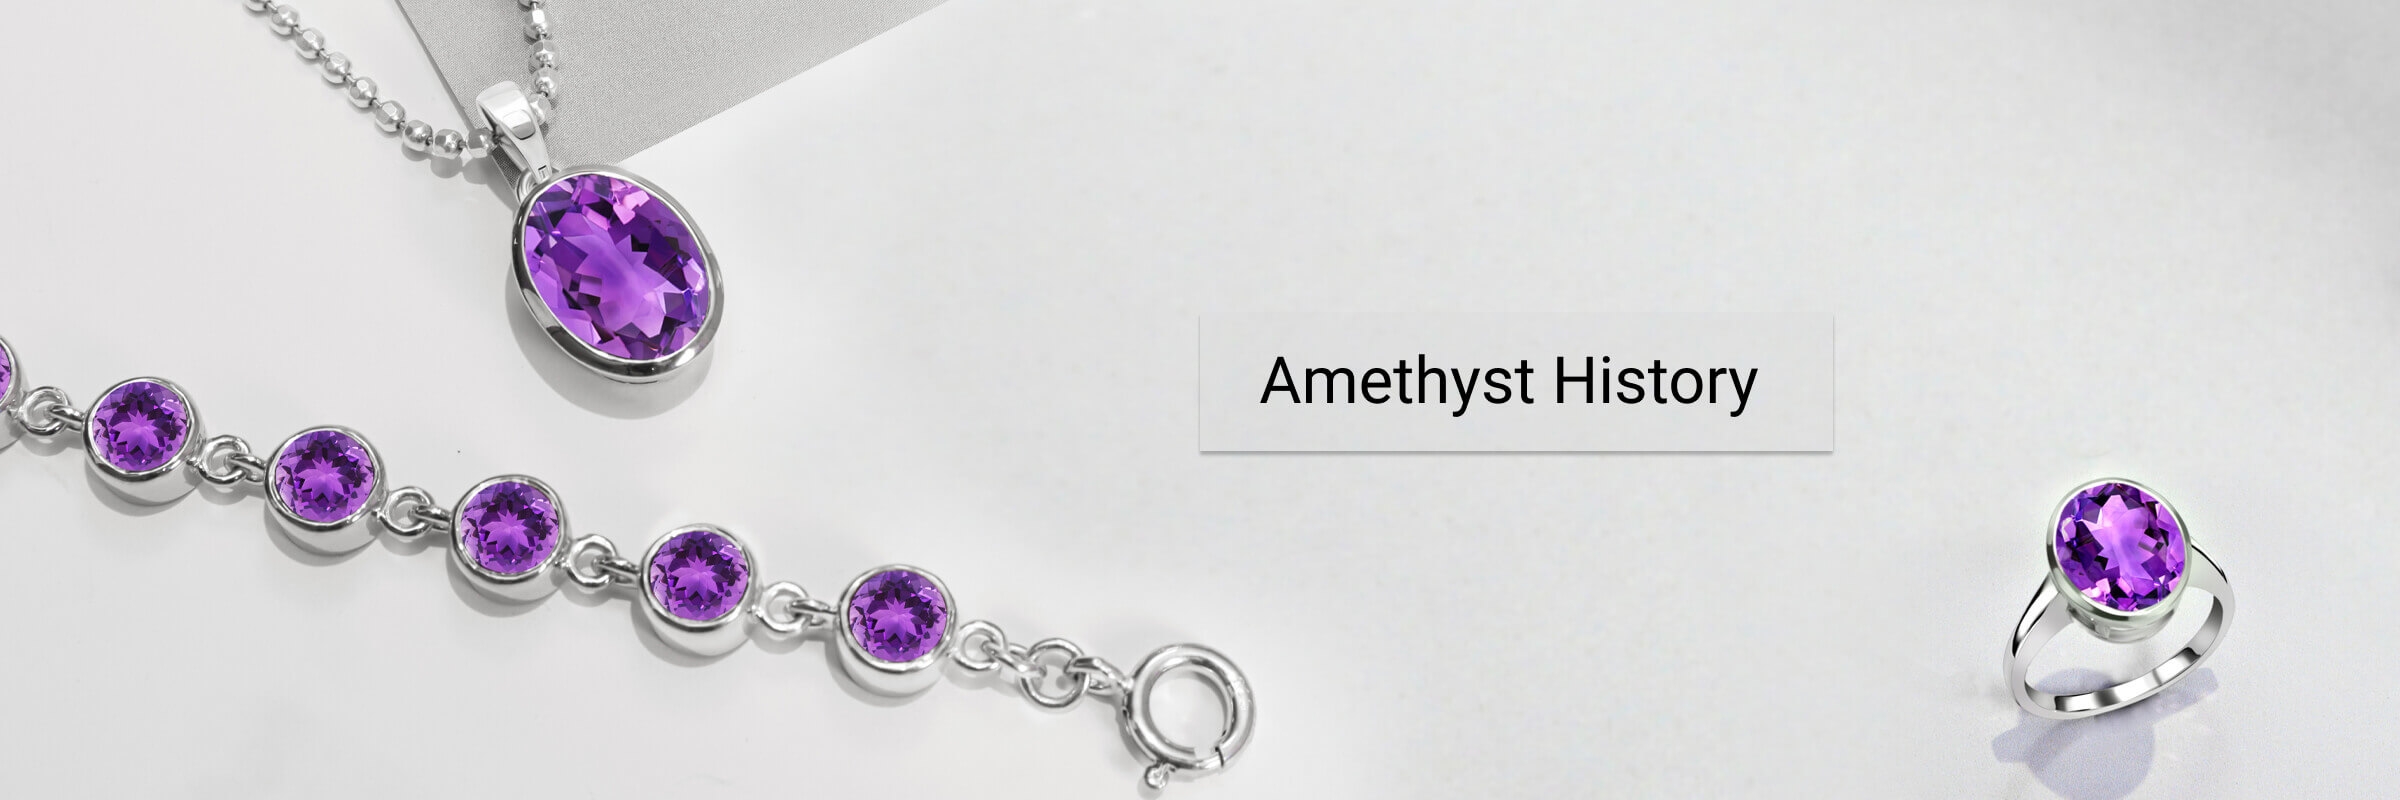 History of Amethyst